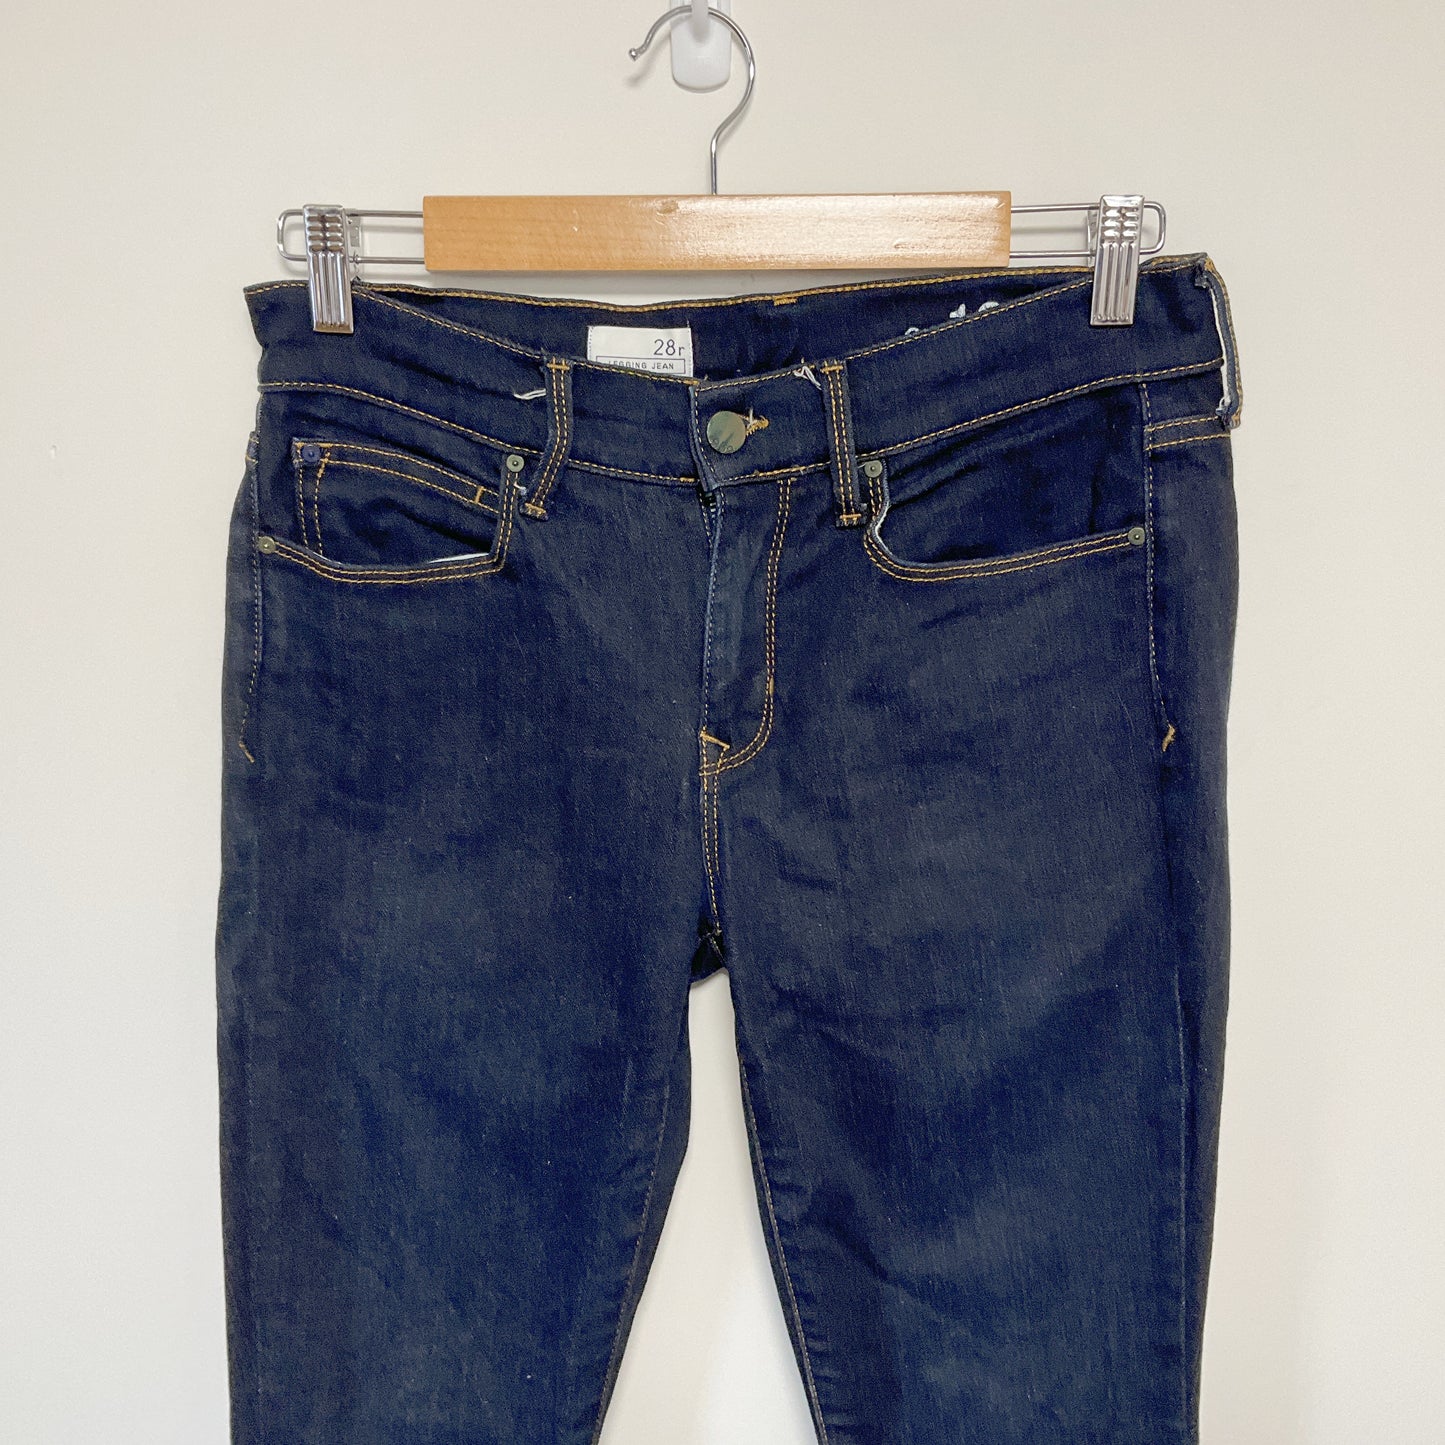 Gap 1969 - Legging Jeans